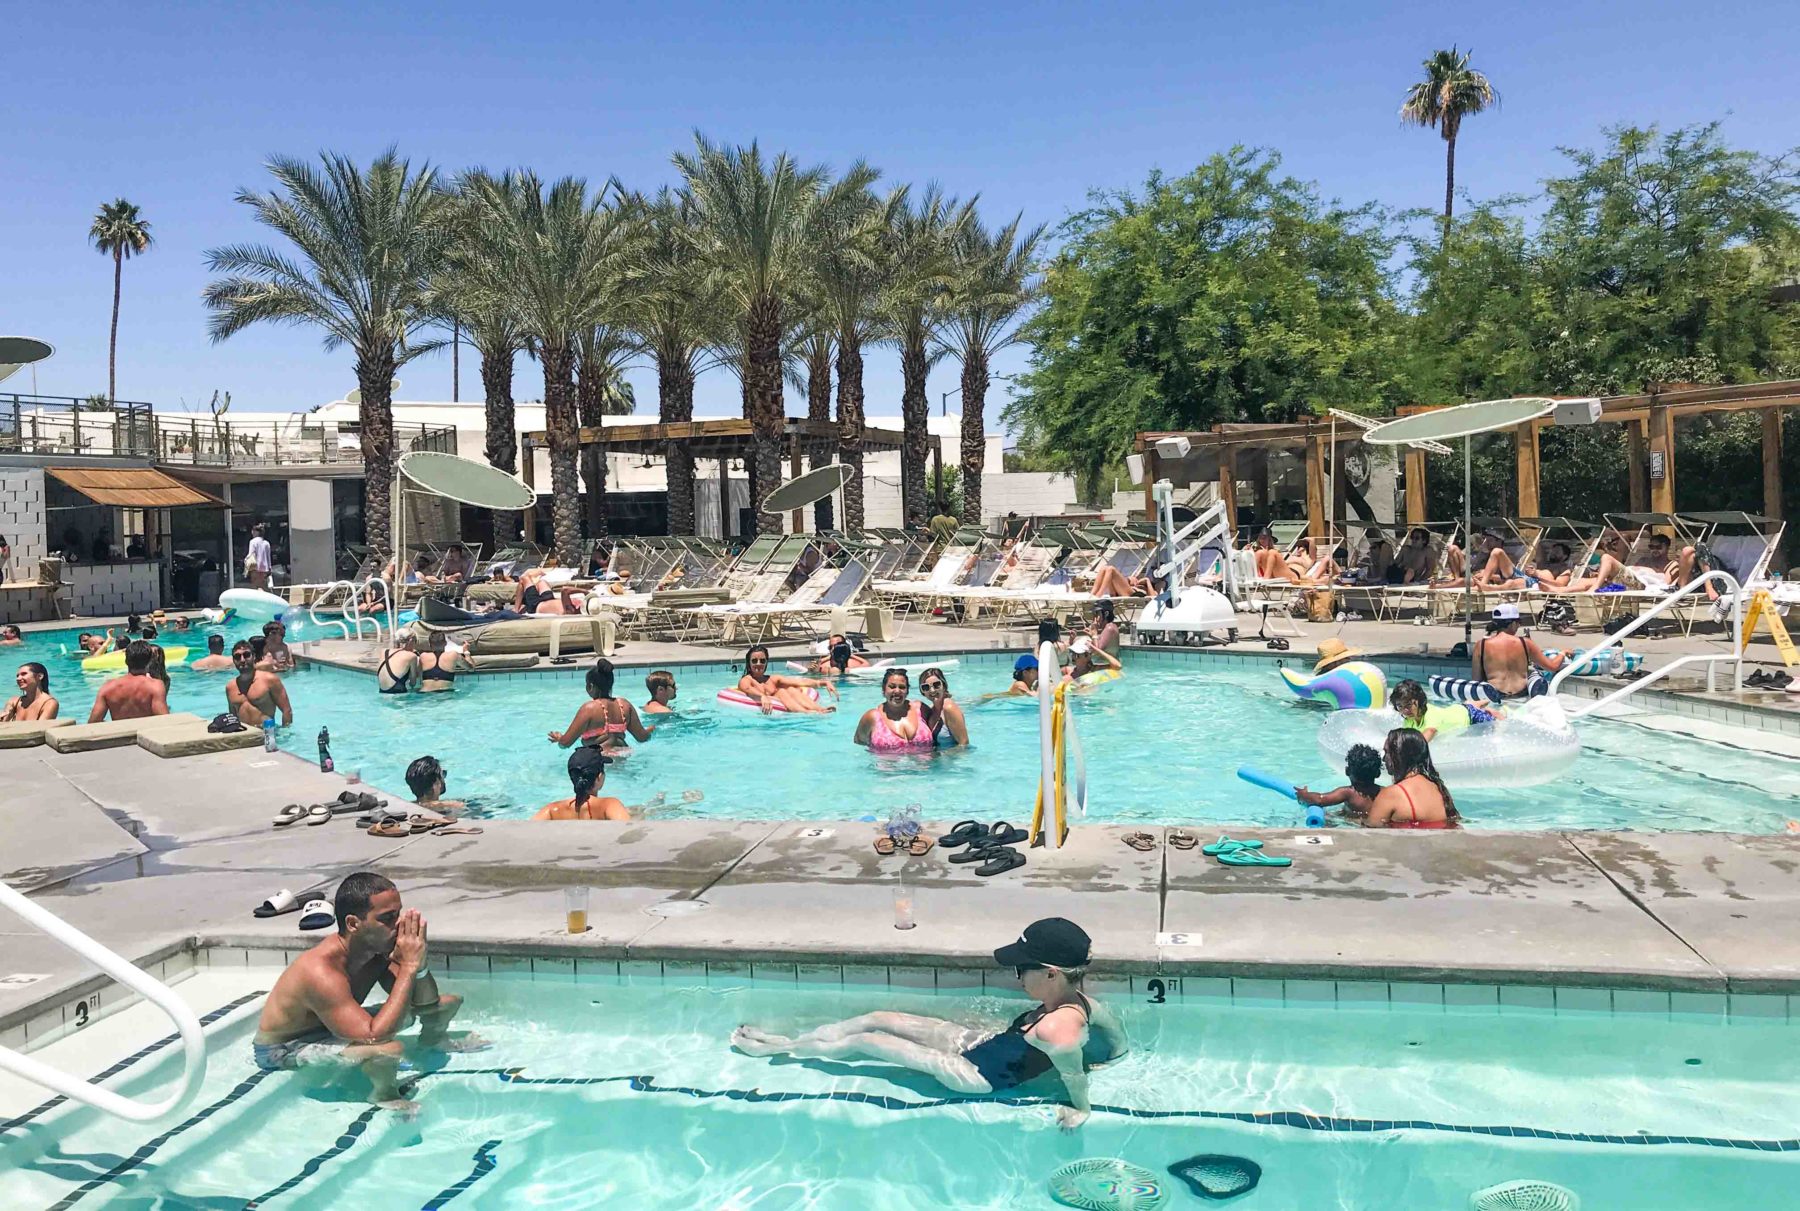 ACE Hotel Swim club Palm Springs